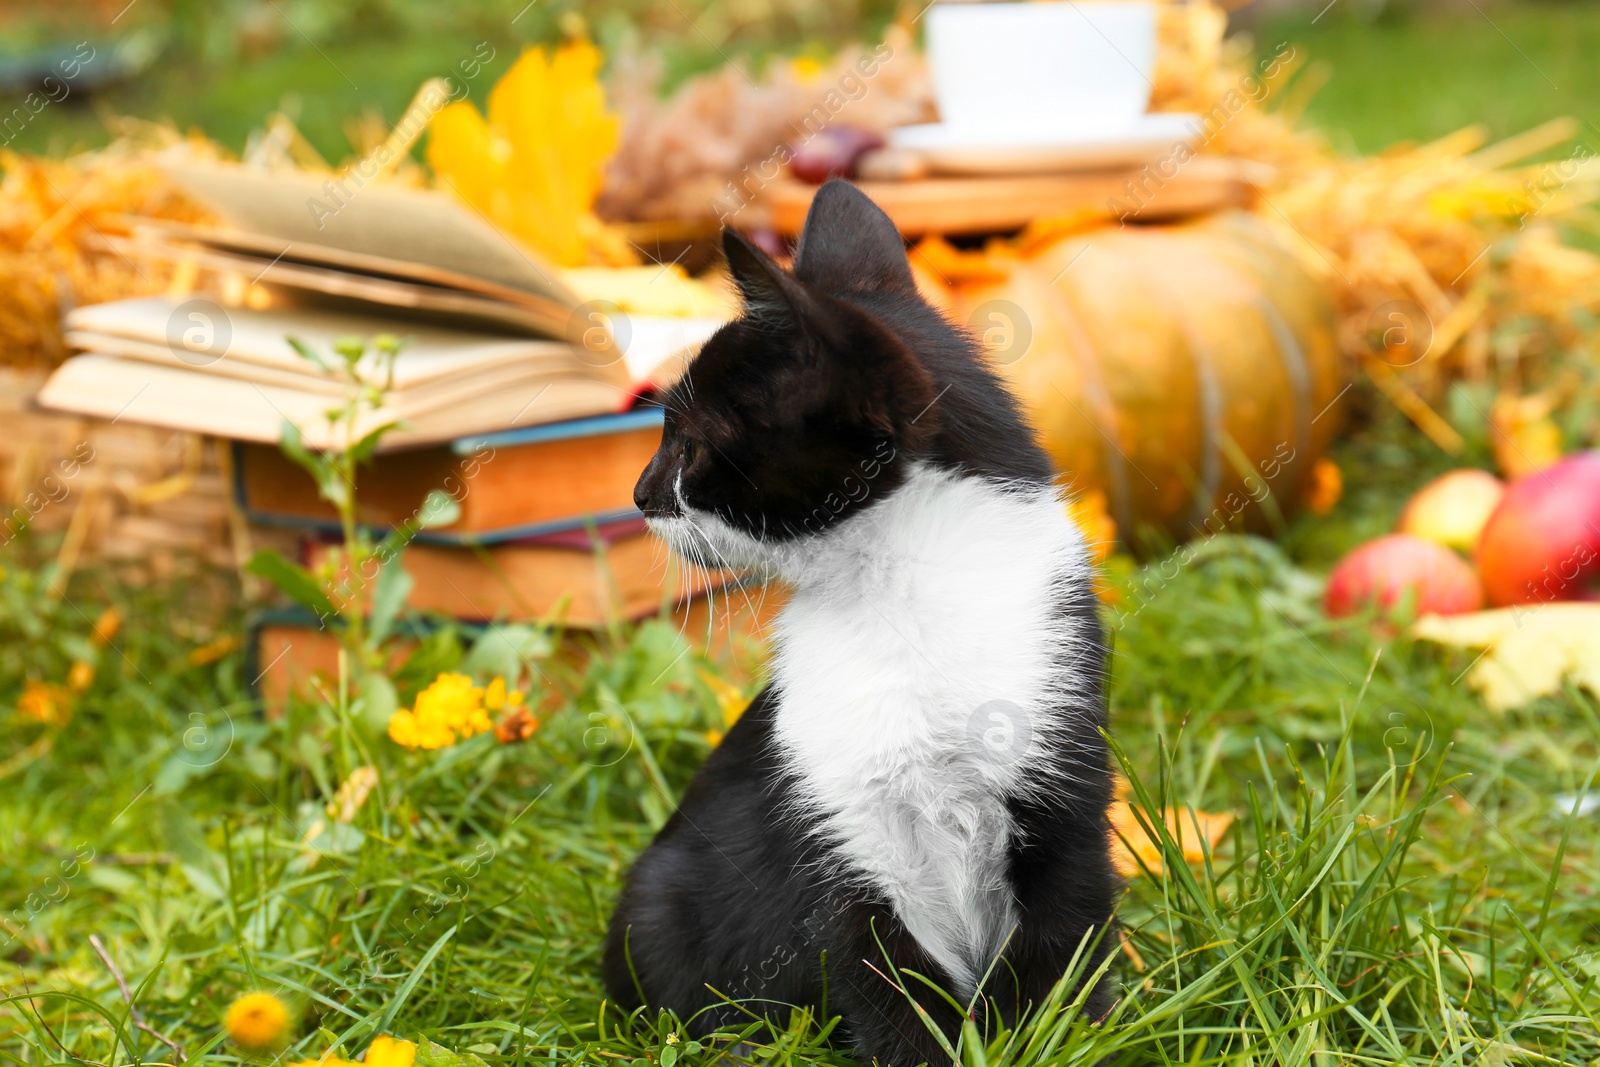 Photo of Adorable black and white kitten sitting on green grass outdoors. Autumn season